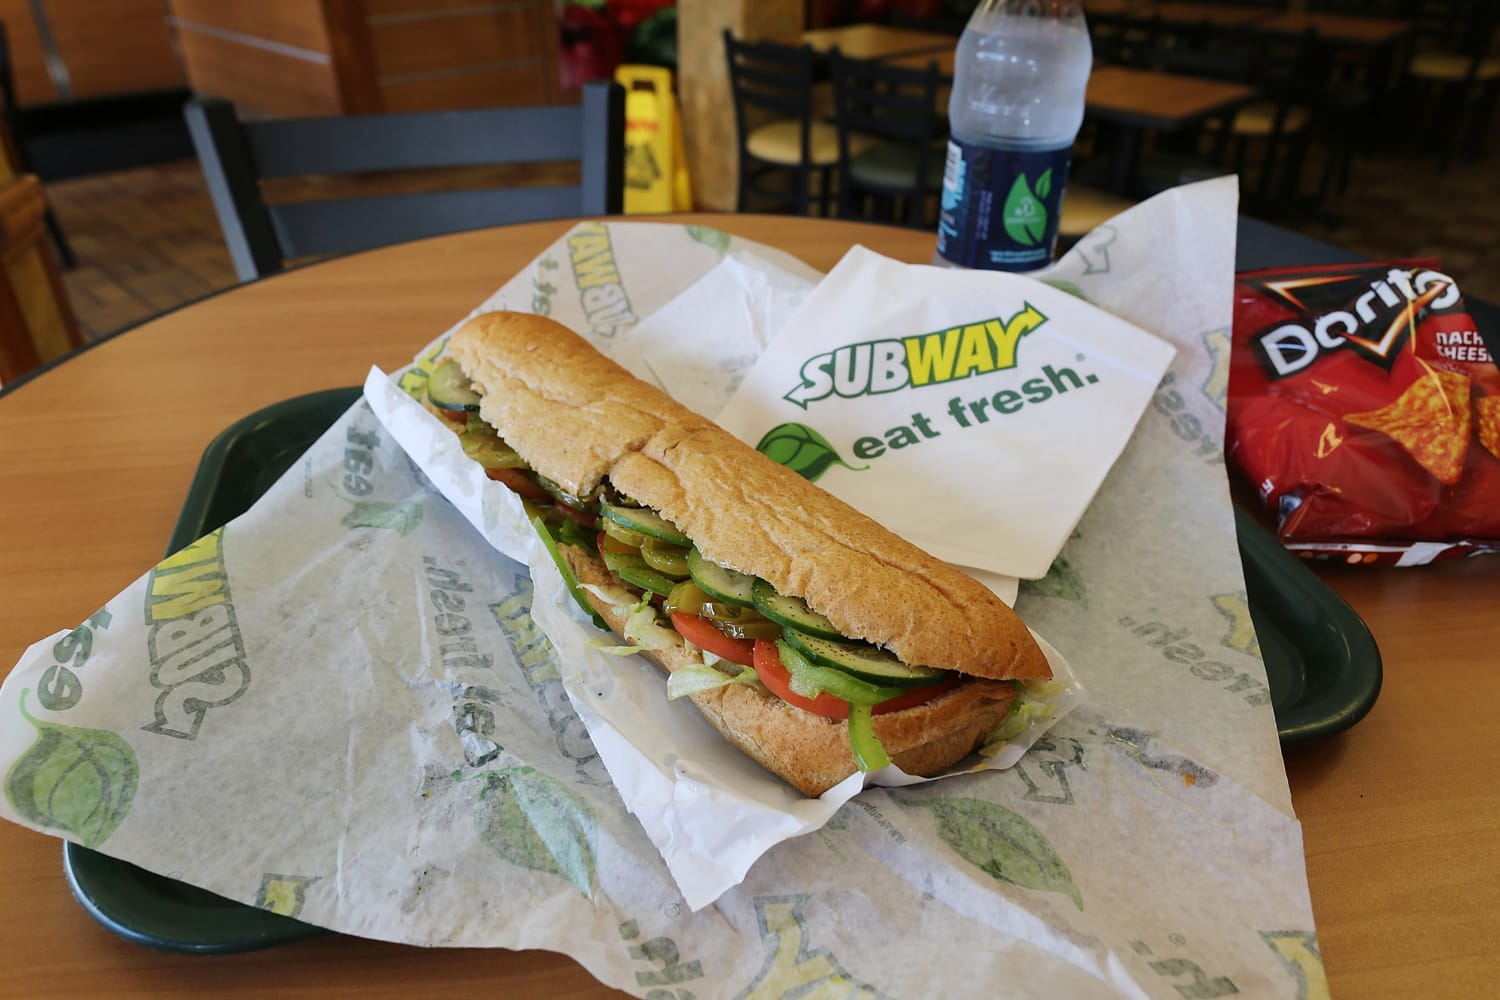 subway-s-sandwich-bread-isn-t-legally-bread-irish-court-rules